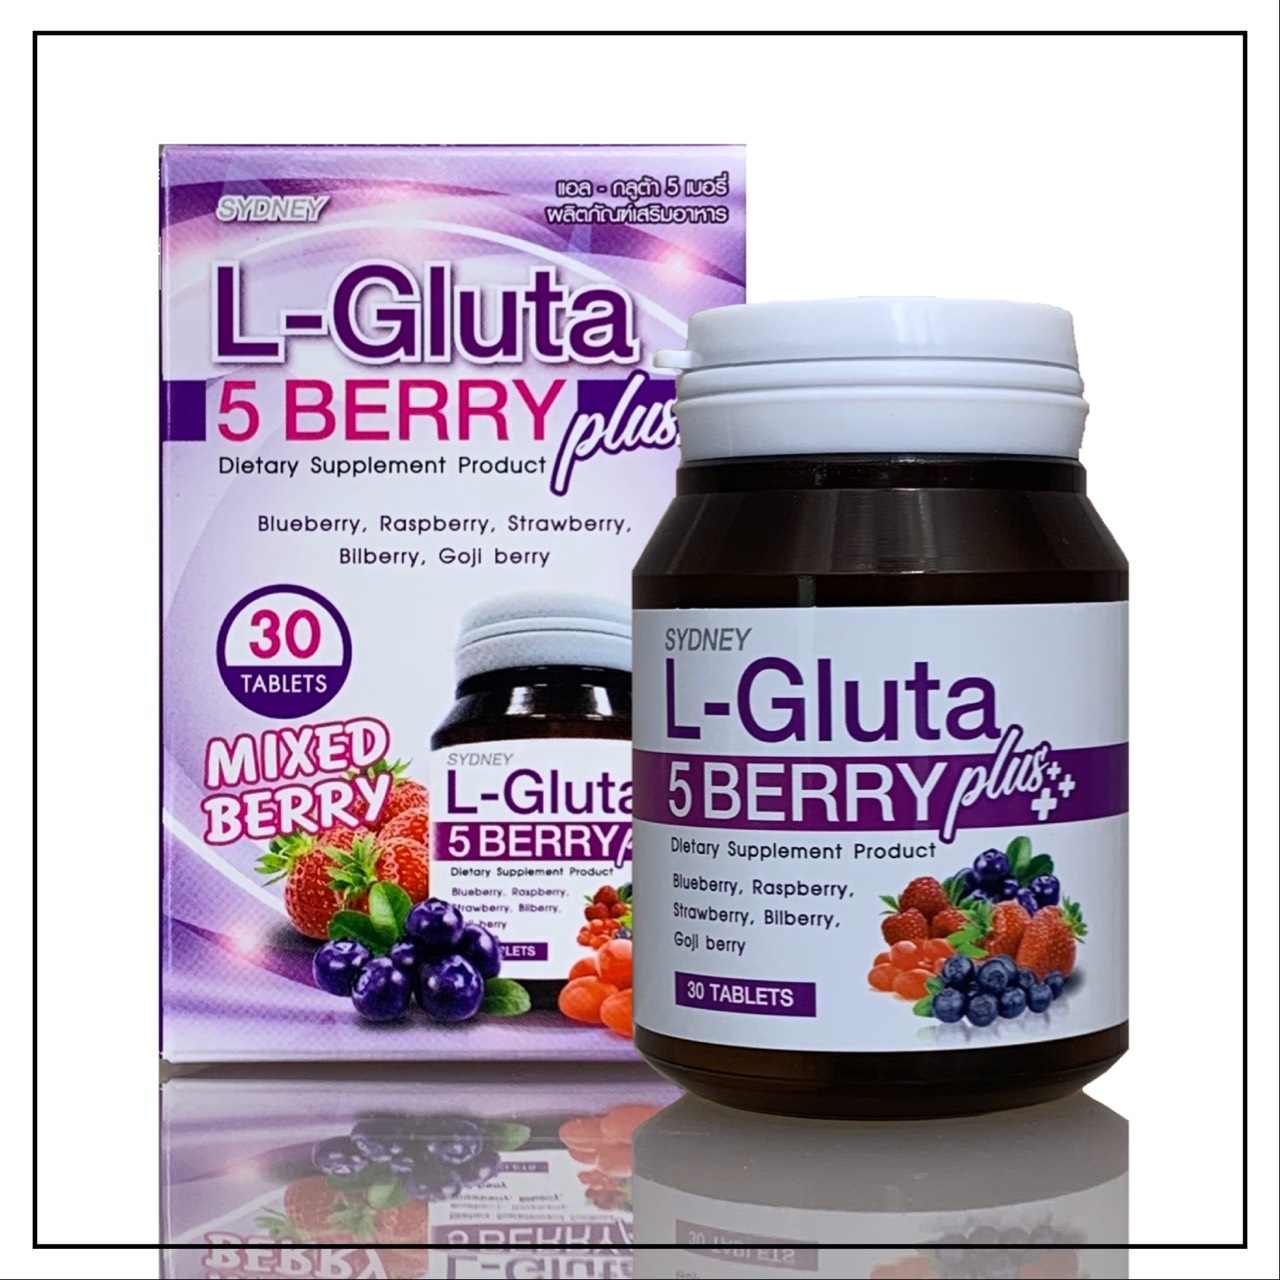 Gluta กลูต้า Shining L-Gluta 5 berry แอล-กลูต้าอาหารเสริมเร่งผิวขาวสูตรใหม่ L Gluta (30 เม็ดx1 กระปุก)